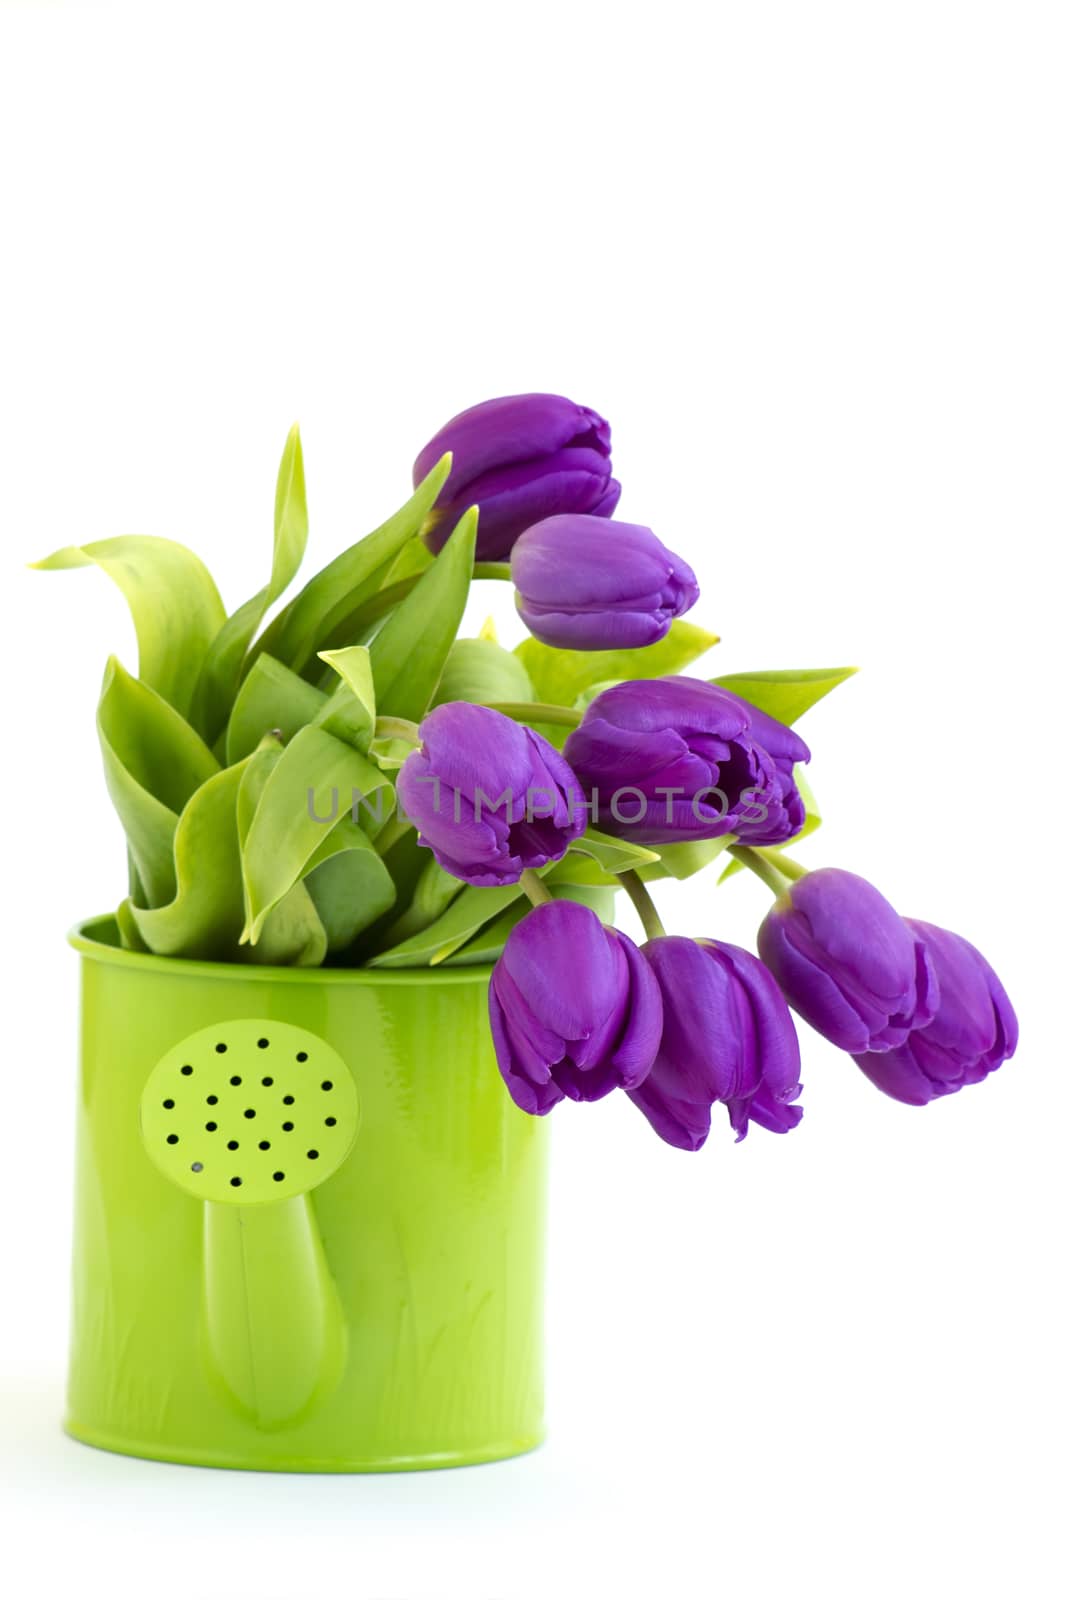 bunch of violet tulips by miradrozdowski